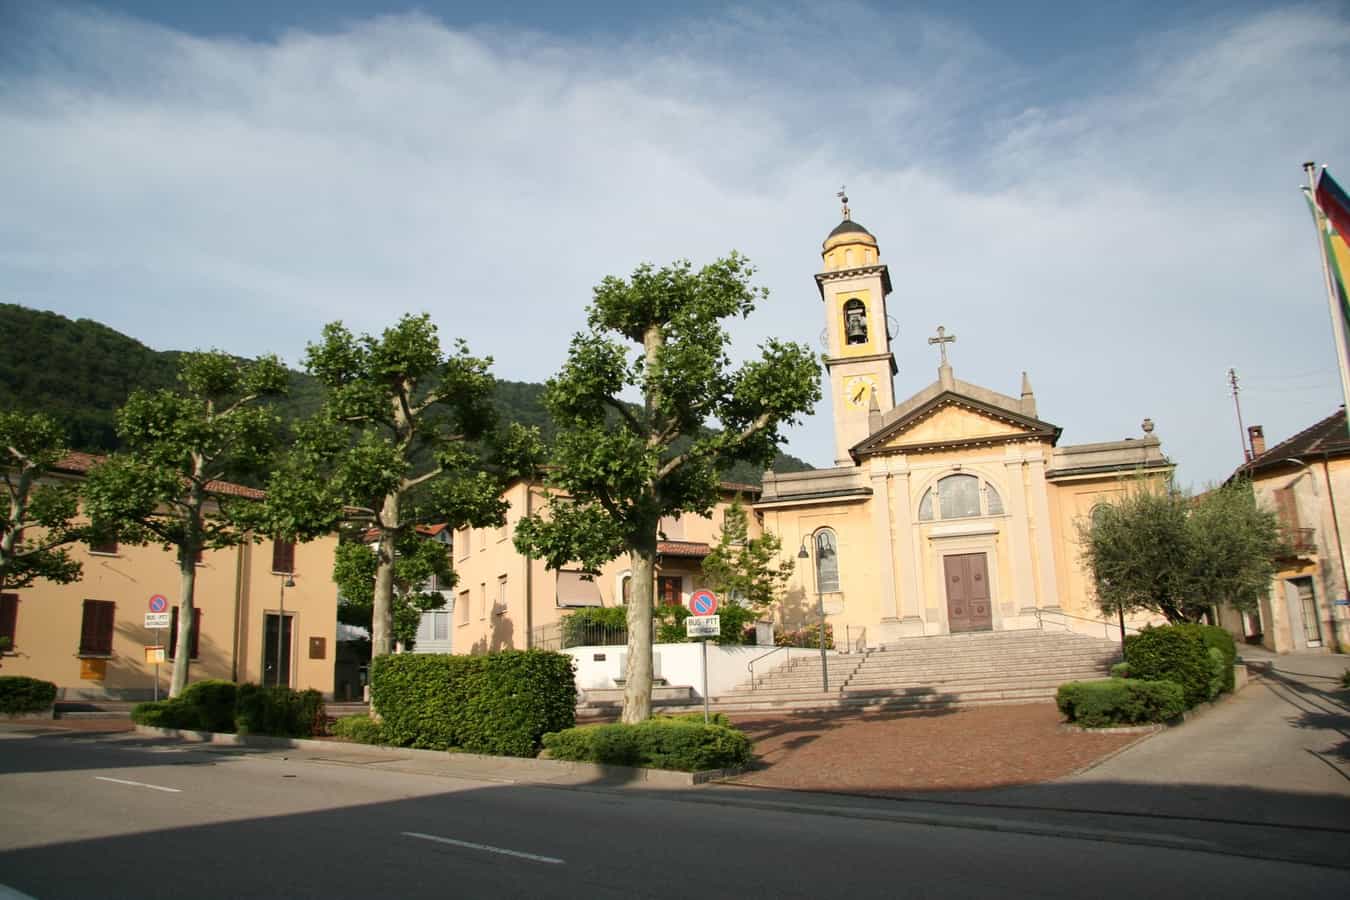 Dorfplatz in Vacallo